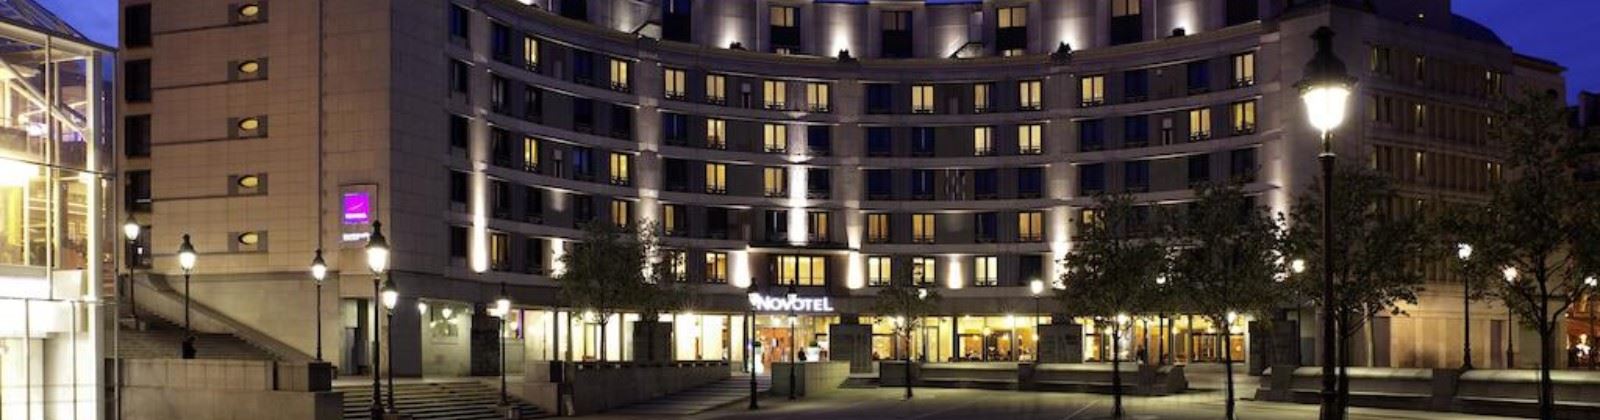 OLEVENE image - novotel-paris-gare-de-lyon-olevene-restaurant-hotel-reunion-